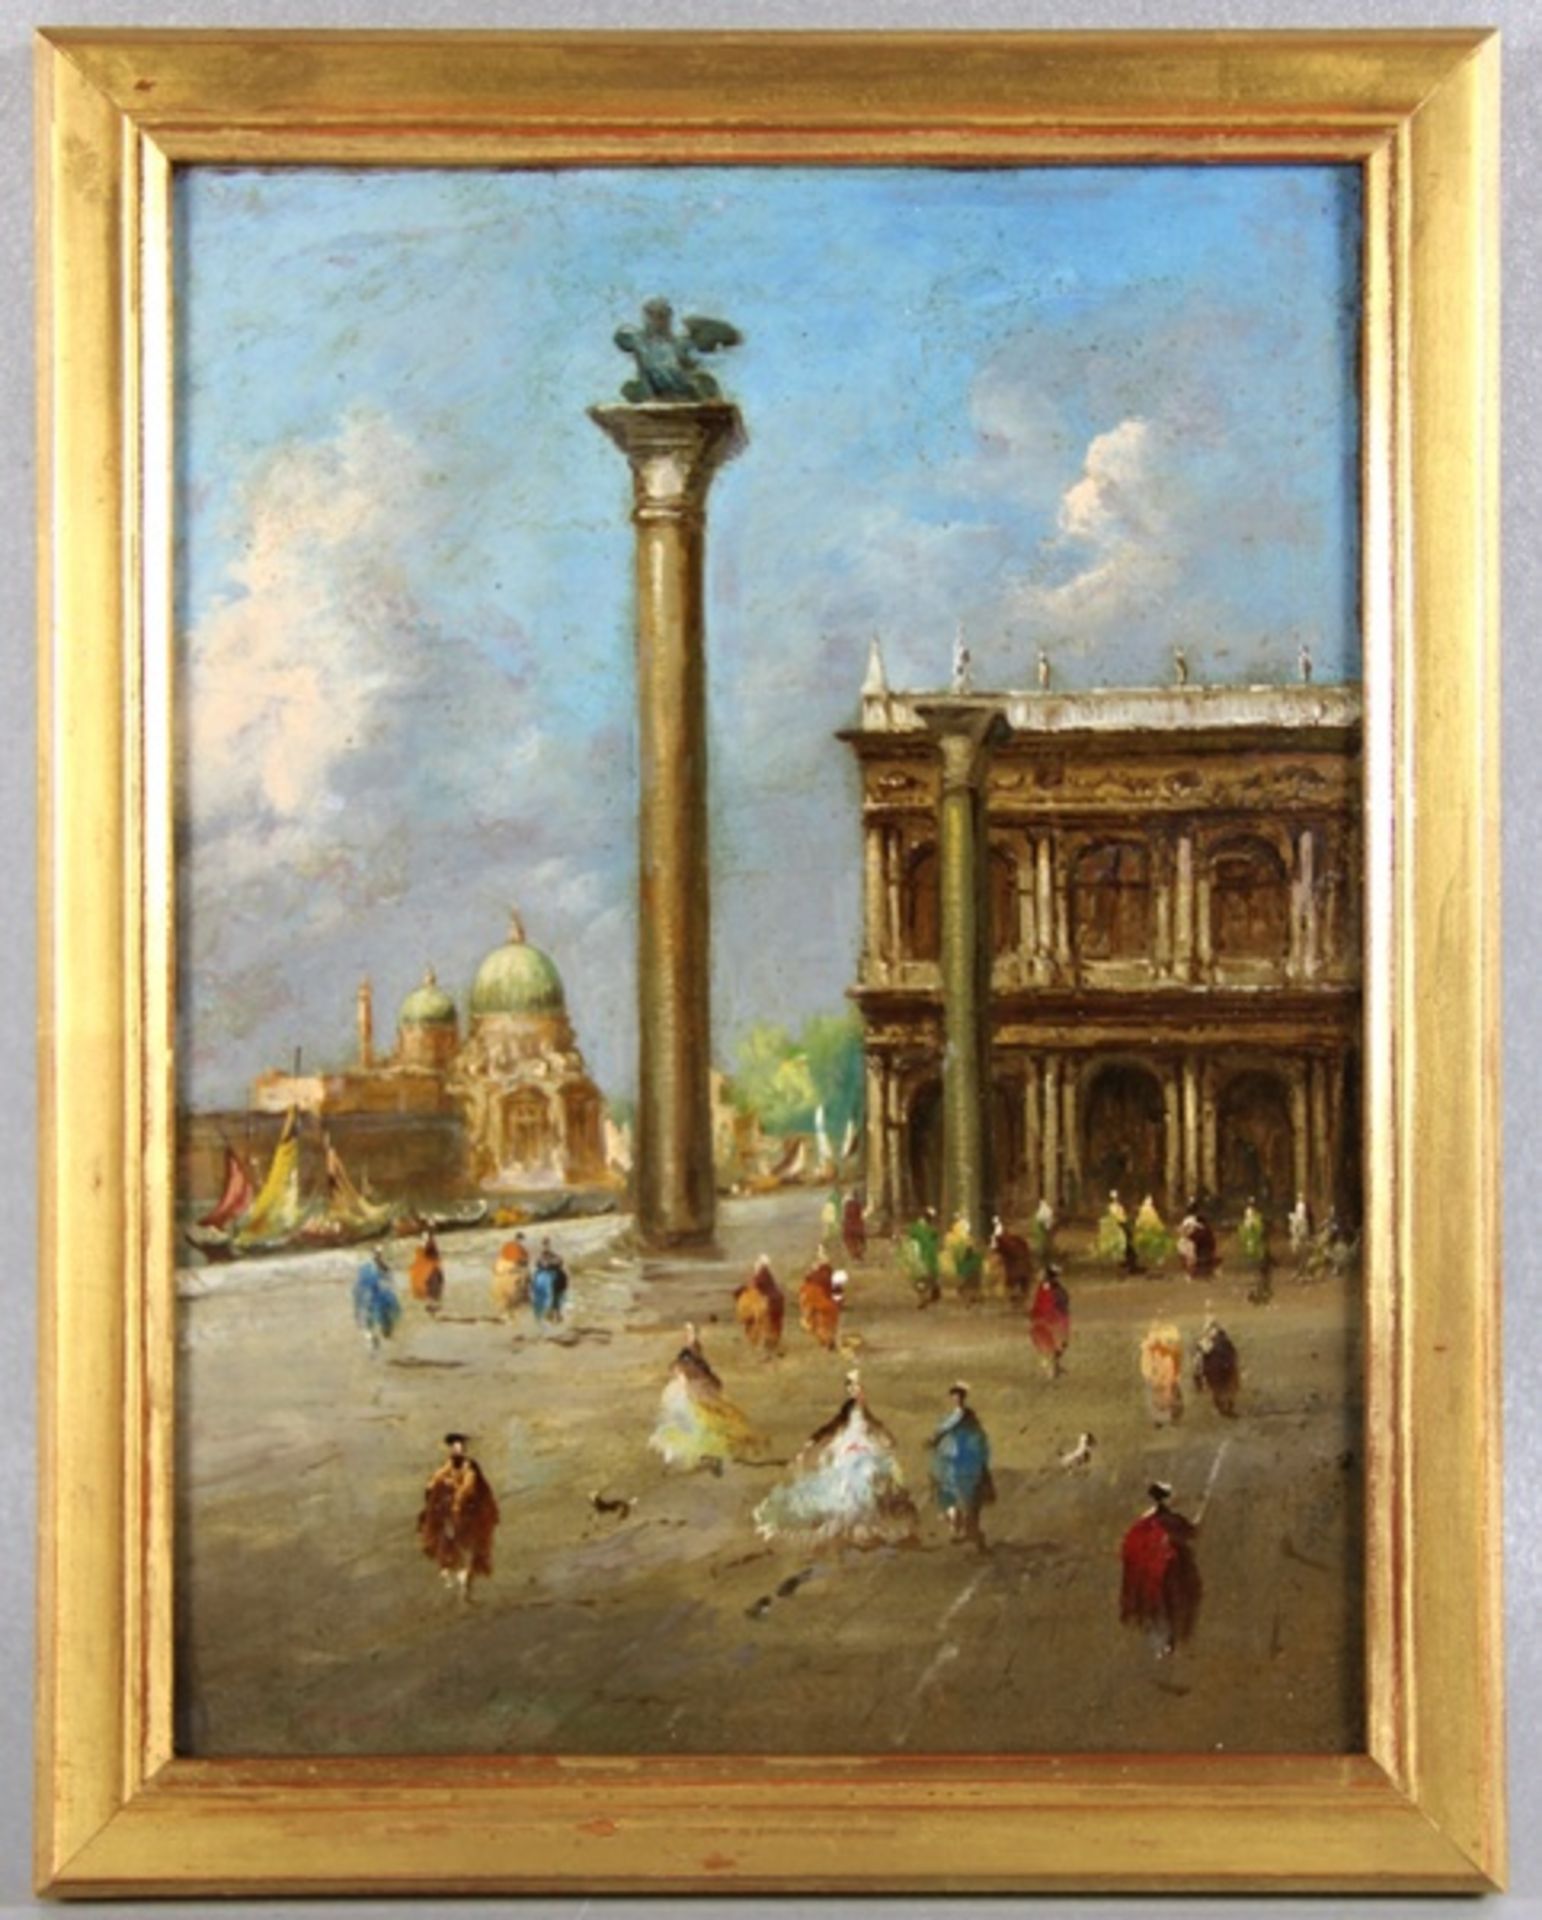 italienische Schuleum 1800, Venedig, italien. Schule, unter strahlend blauem Himmel flanieren